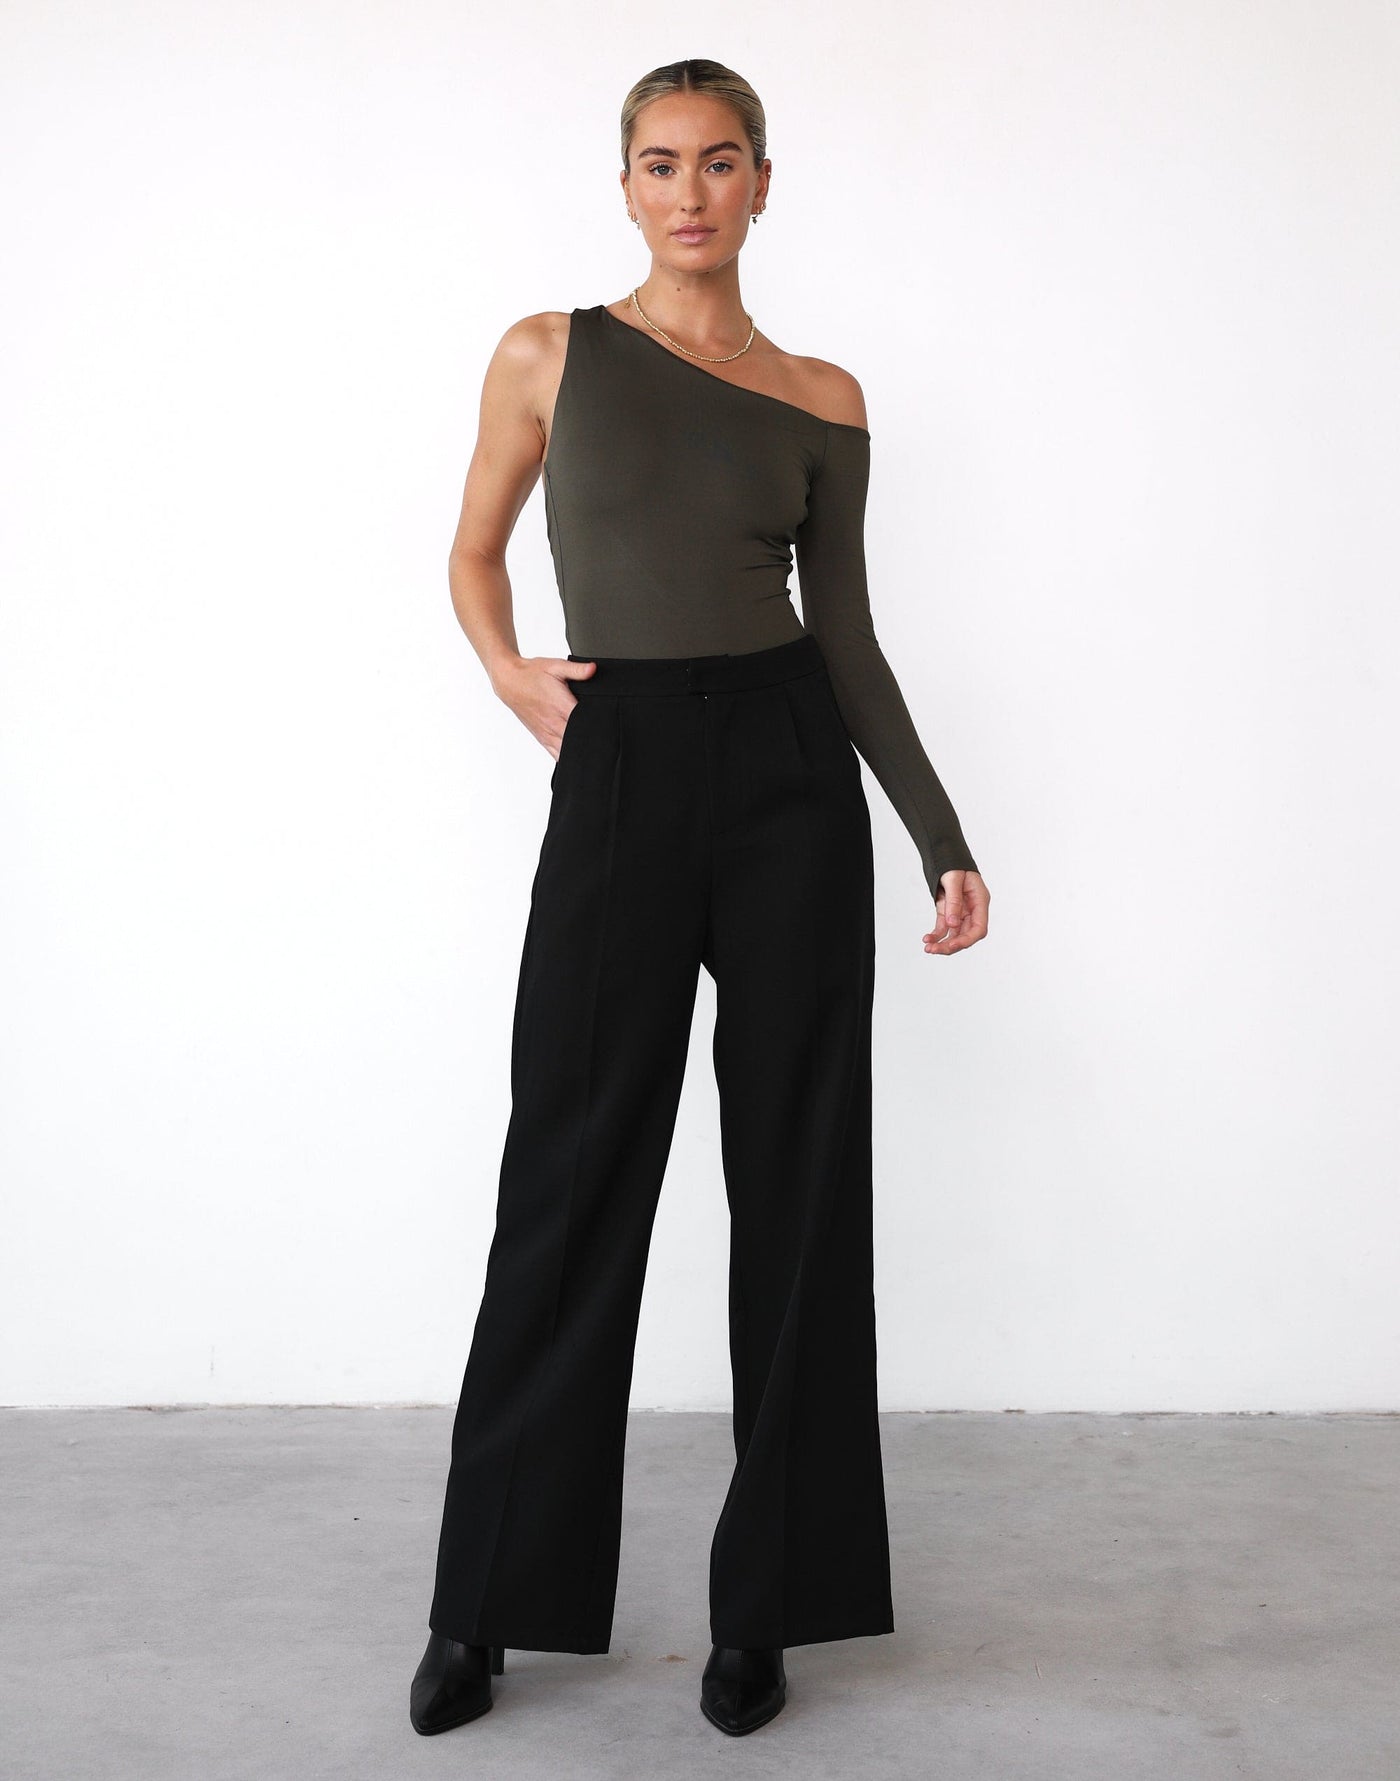 Nico Bodysuit (Burnt Olive) - Women's Top - Charcoal Clothing